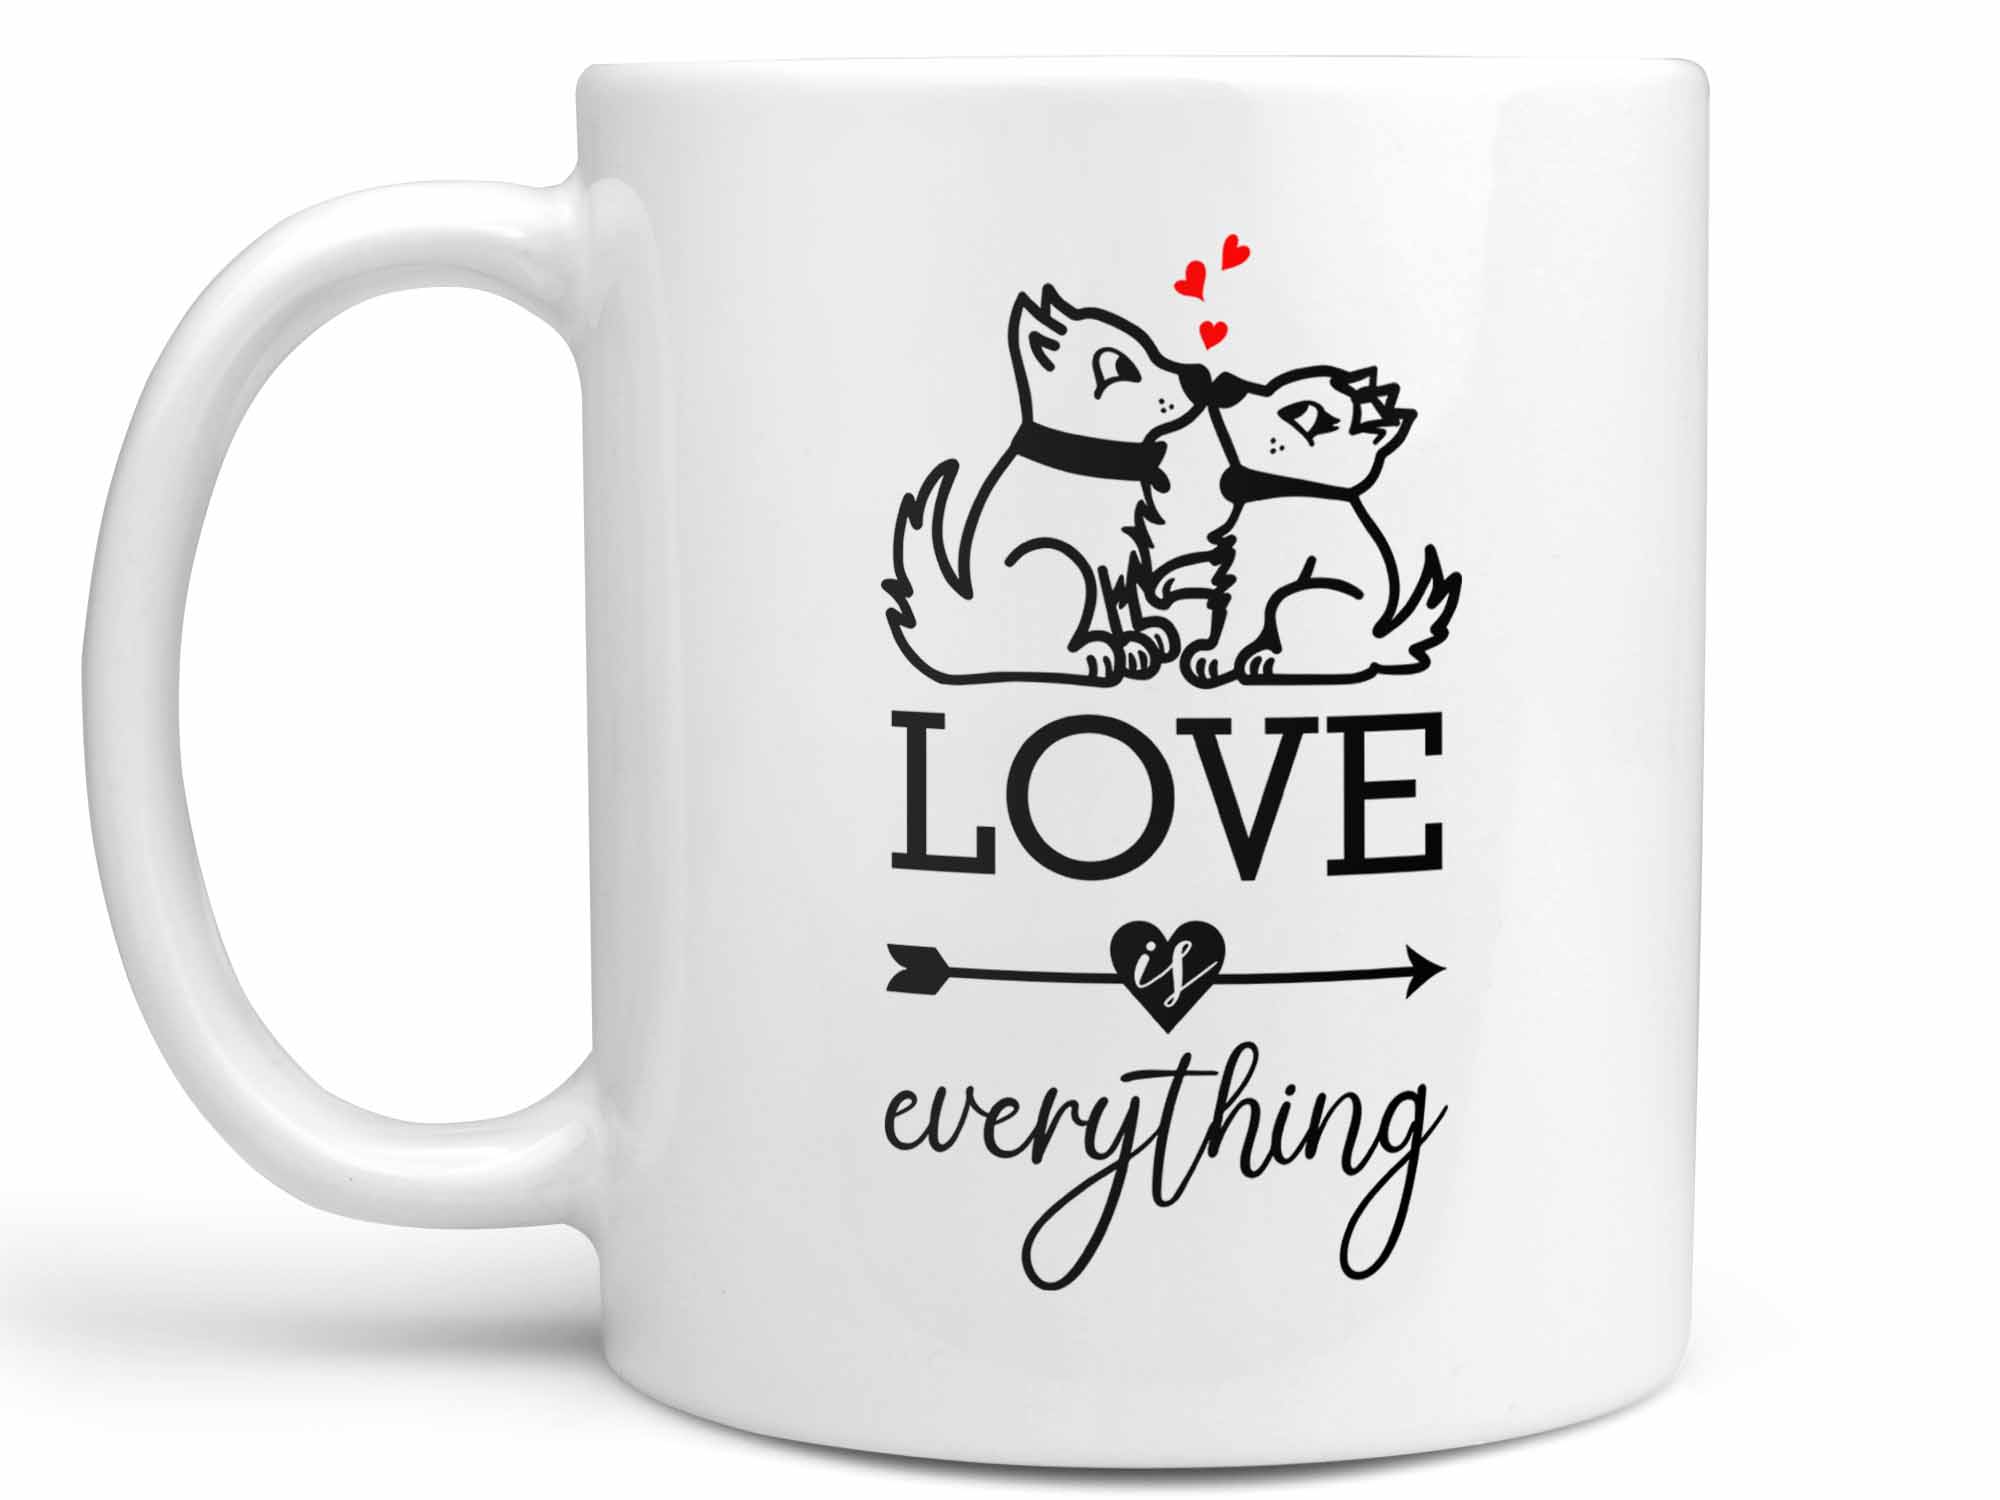 Kissing Dogs Coffee Mug,Coffee Mugs Never Lie,Coffee Mug